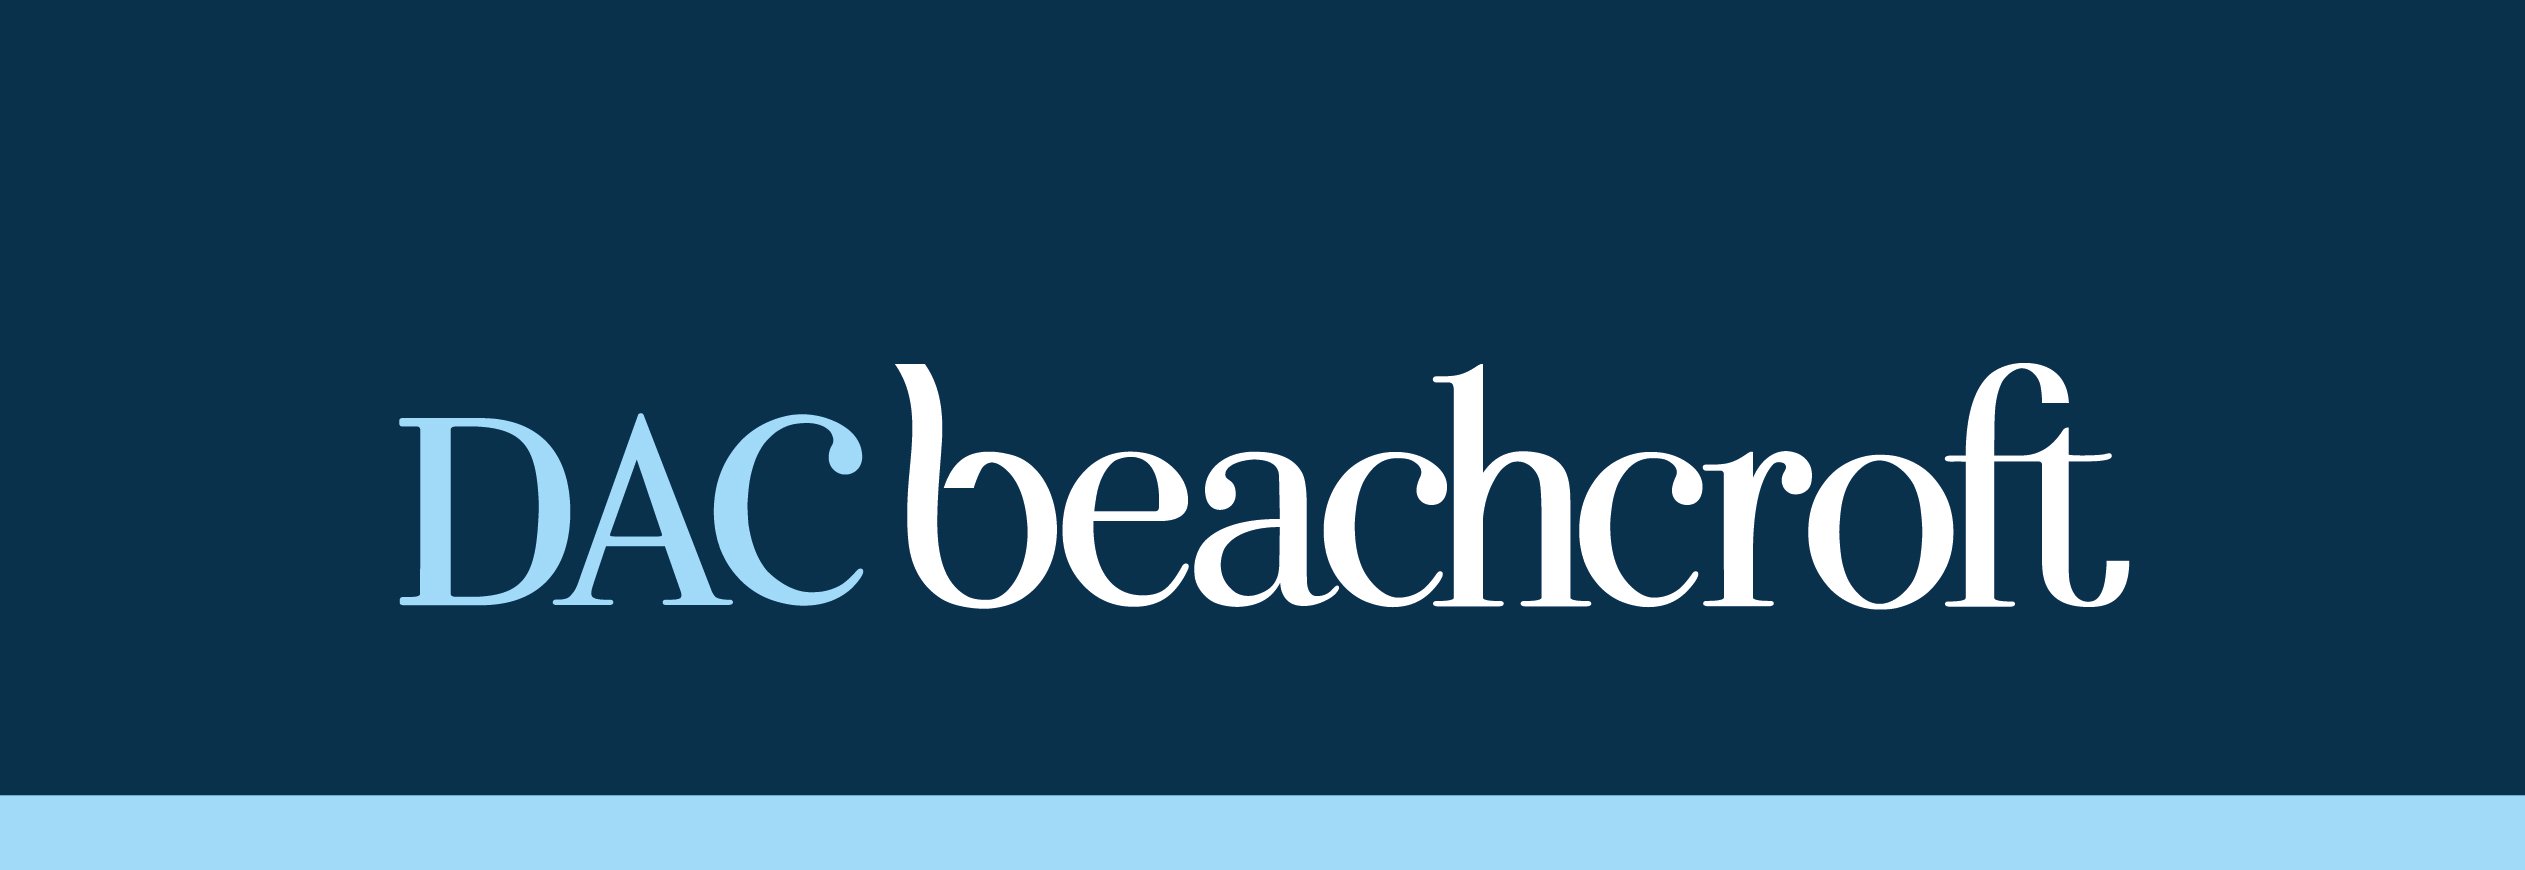 DAC Beachcroft sponsors FinTech North